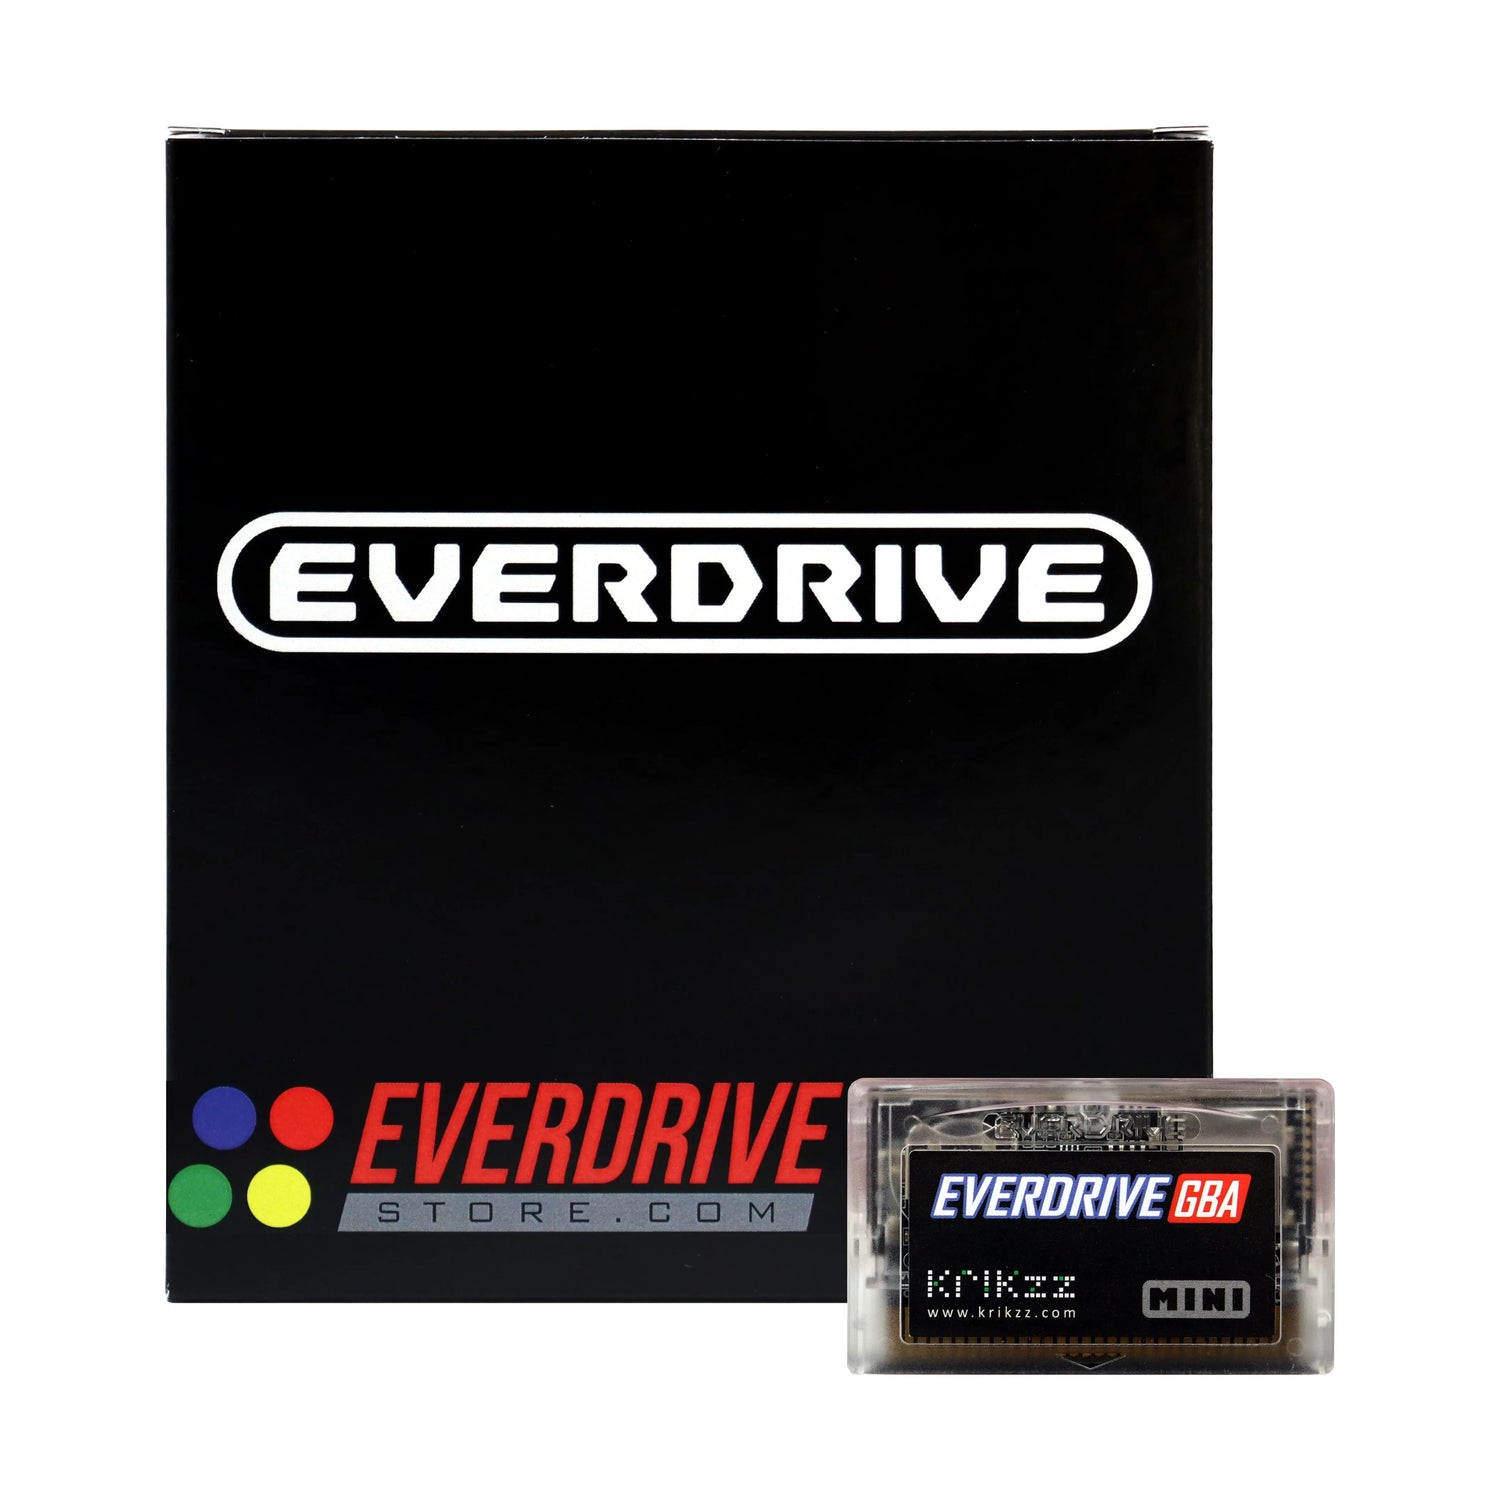 Everdrive GBA Mini - EverdriveStore.com